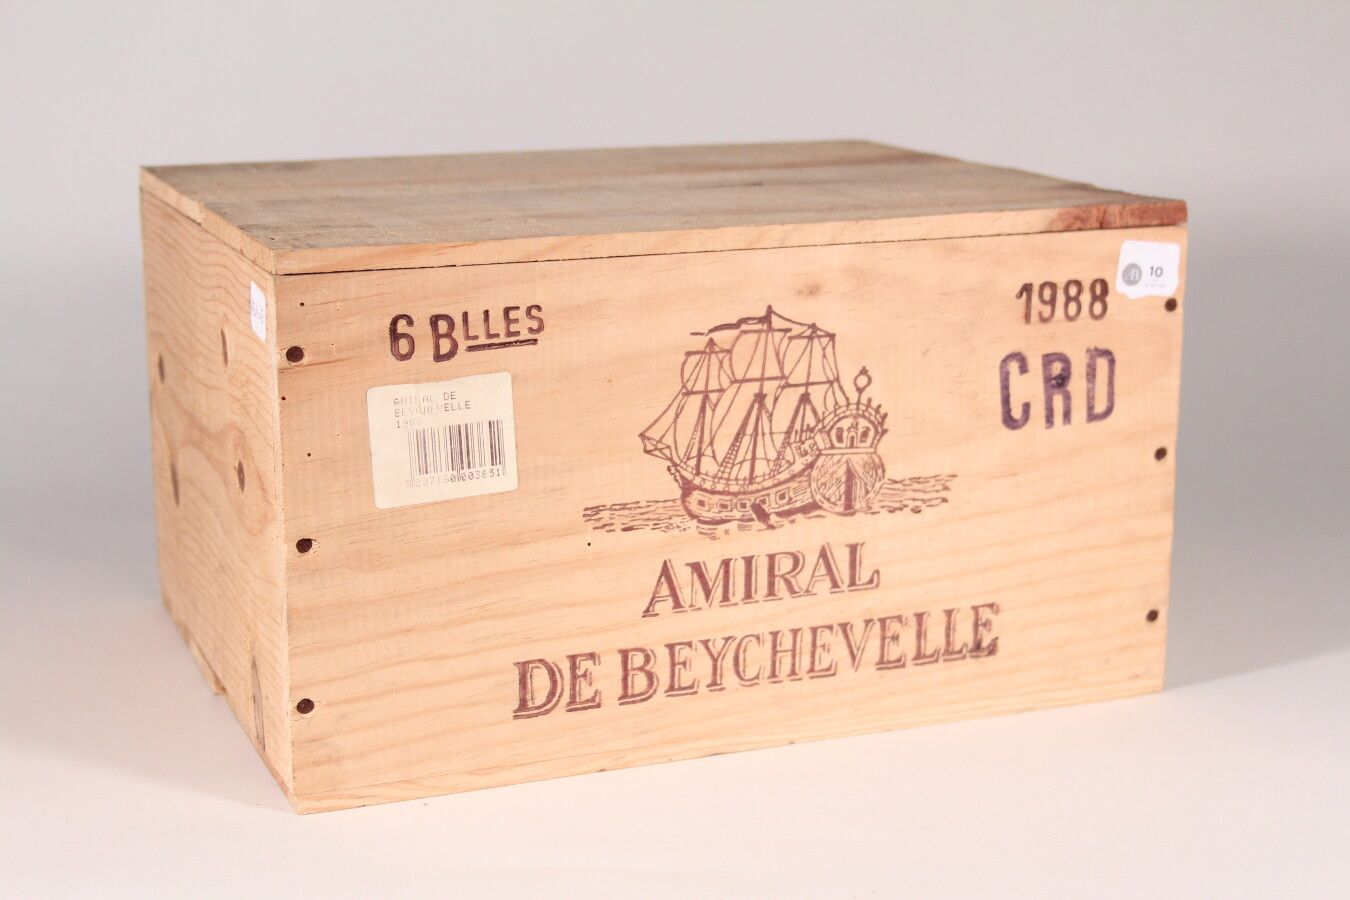 Null 1988 - Amiral de Beychevelle

Saint-Julien Rot - 6 blles CBO